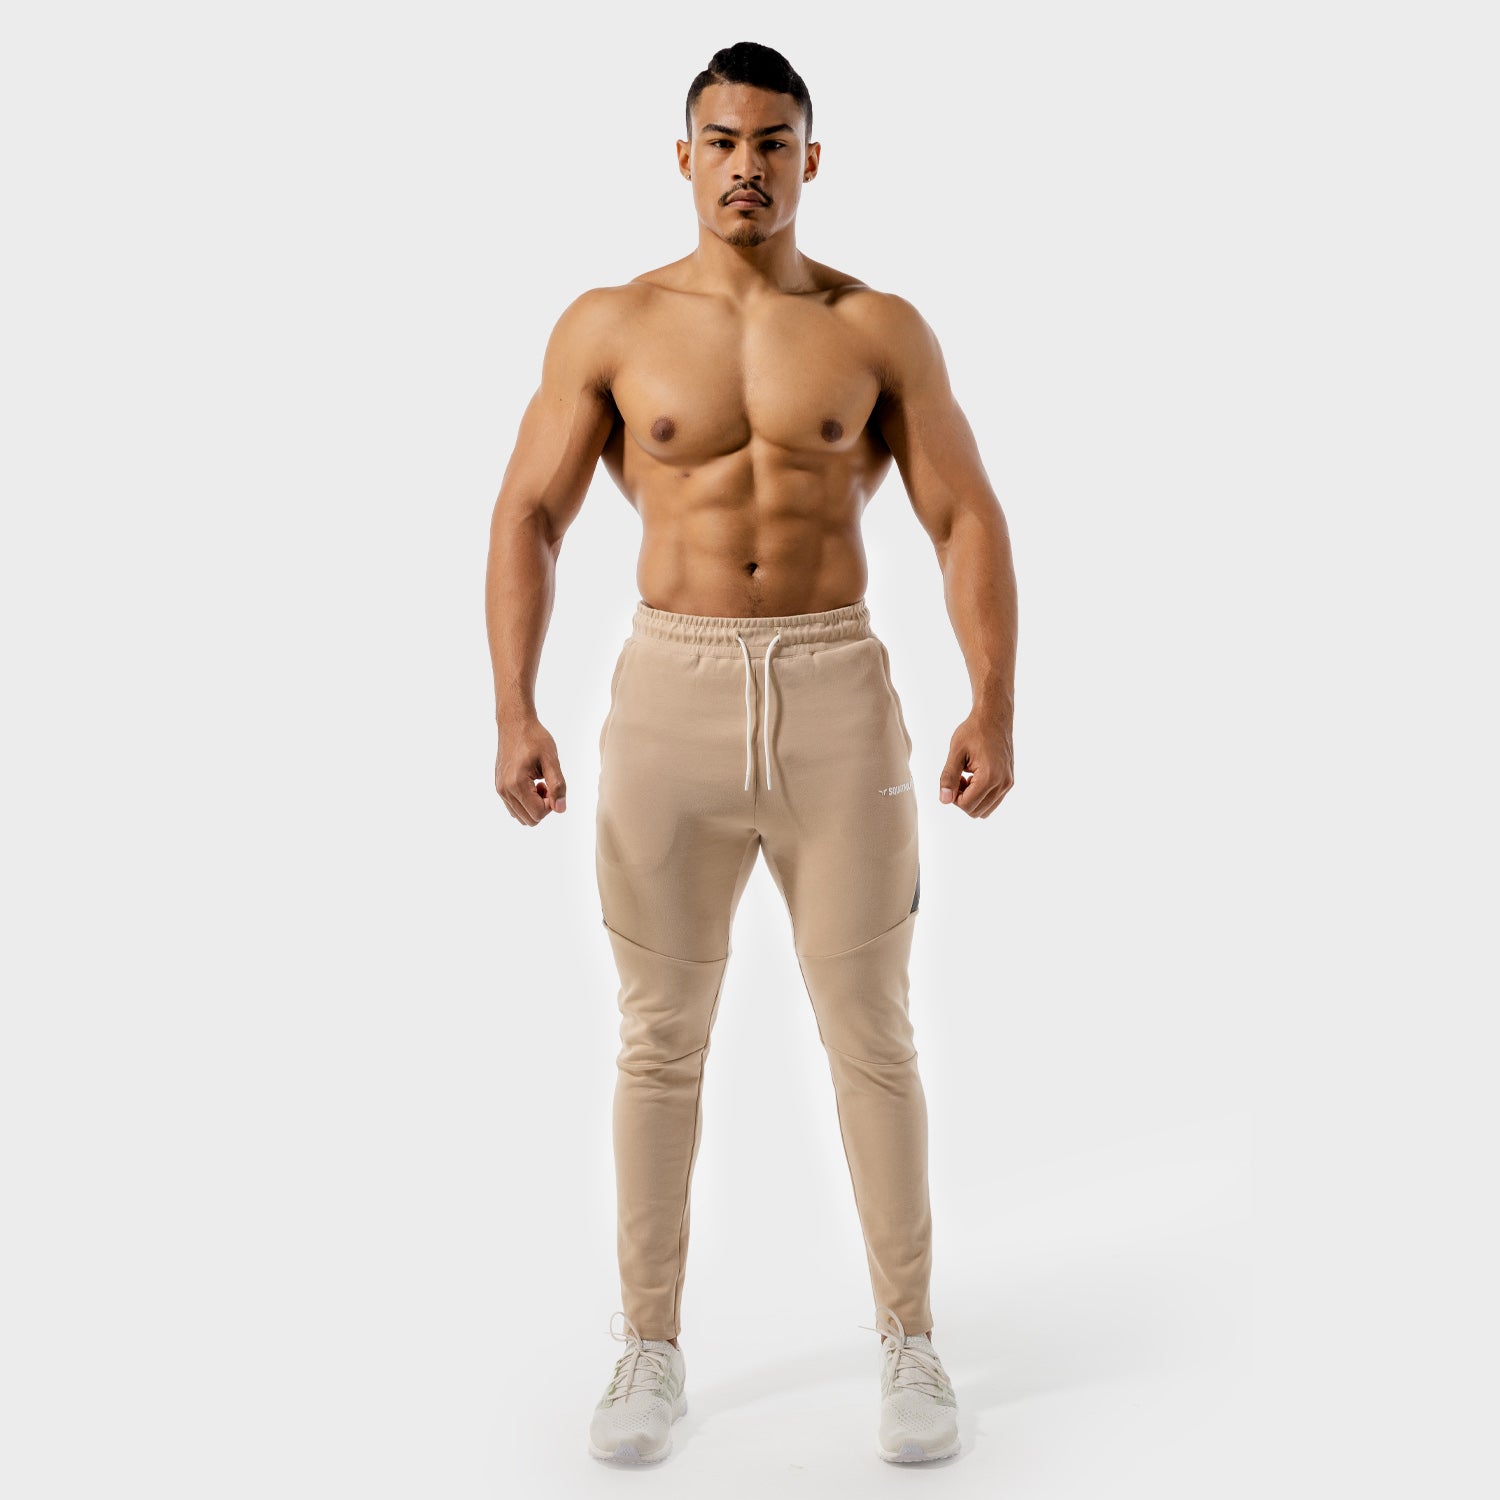 squatwolf-gym-wear-warrior-jogger-pants-brown-workout-pants-for-men